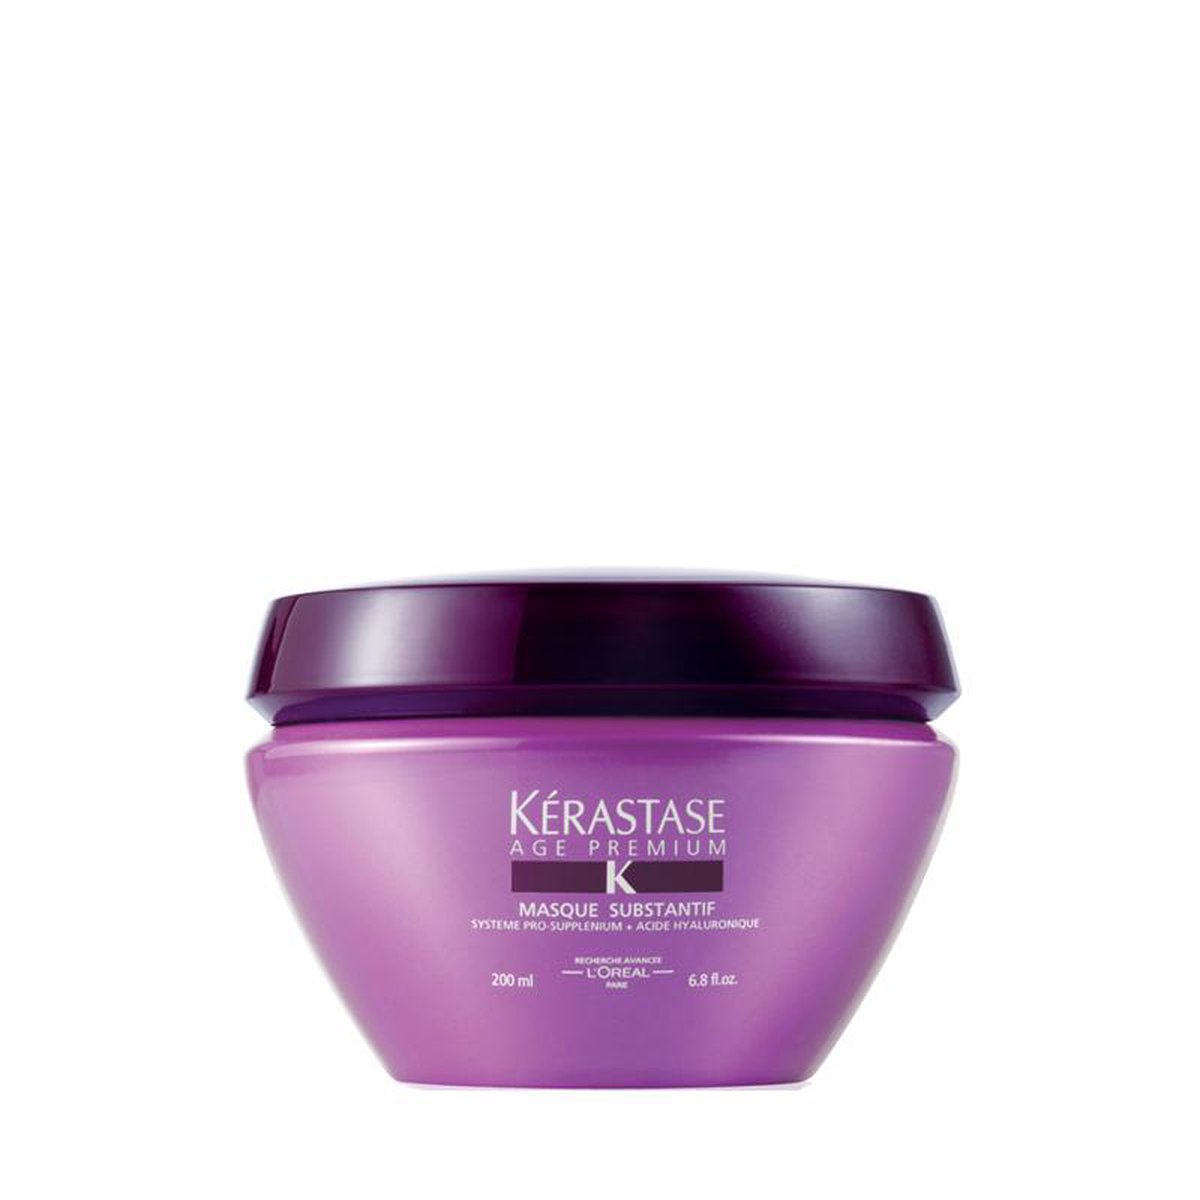 Kérastase Age Premium Masque Substantif 500ml | bol.com